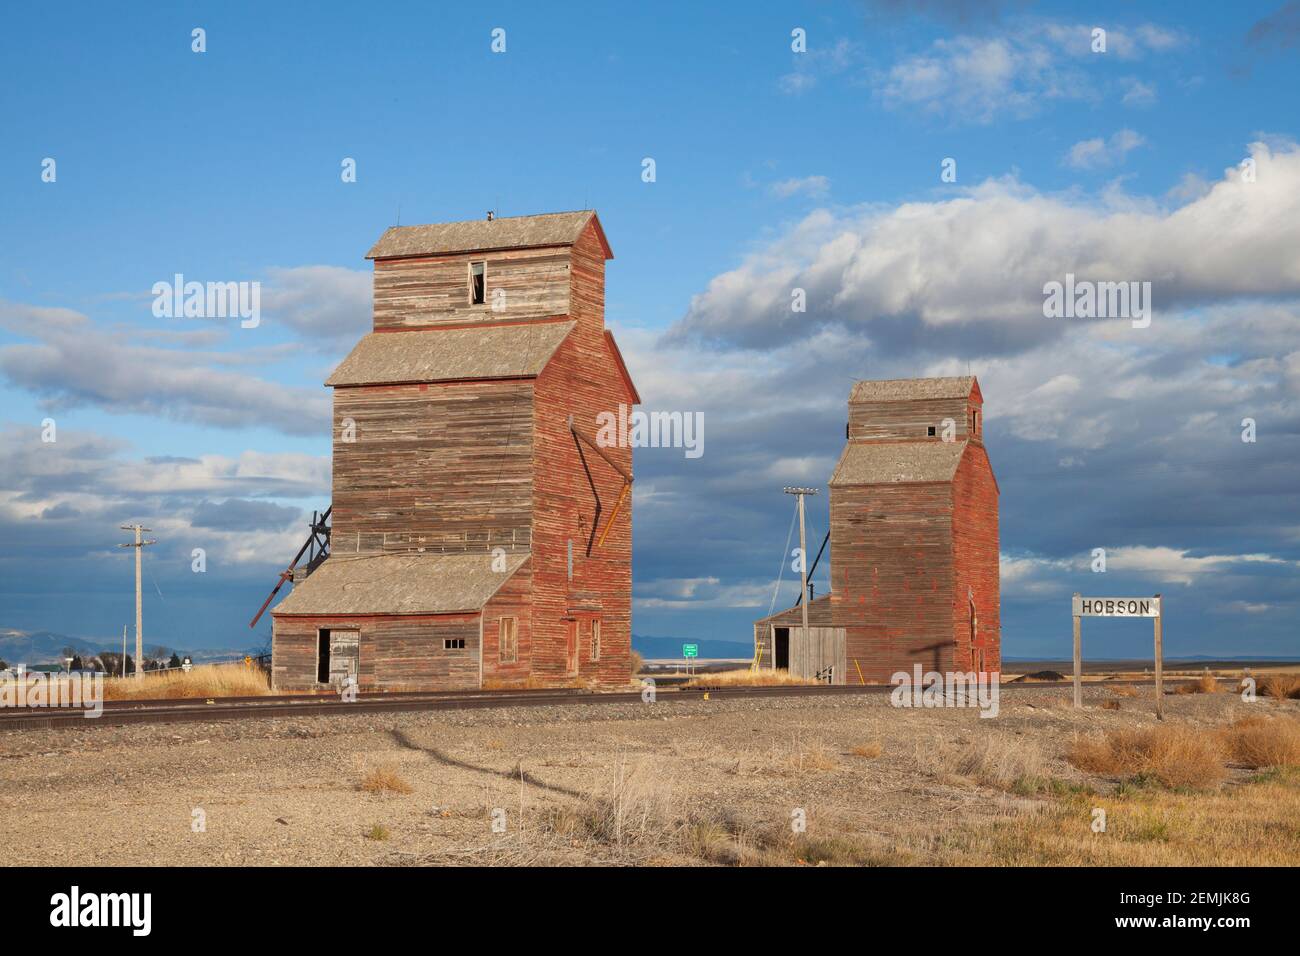 Traditional wooden grain elevators, Hobson, Montana. Stock Photo